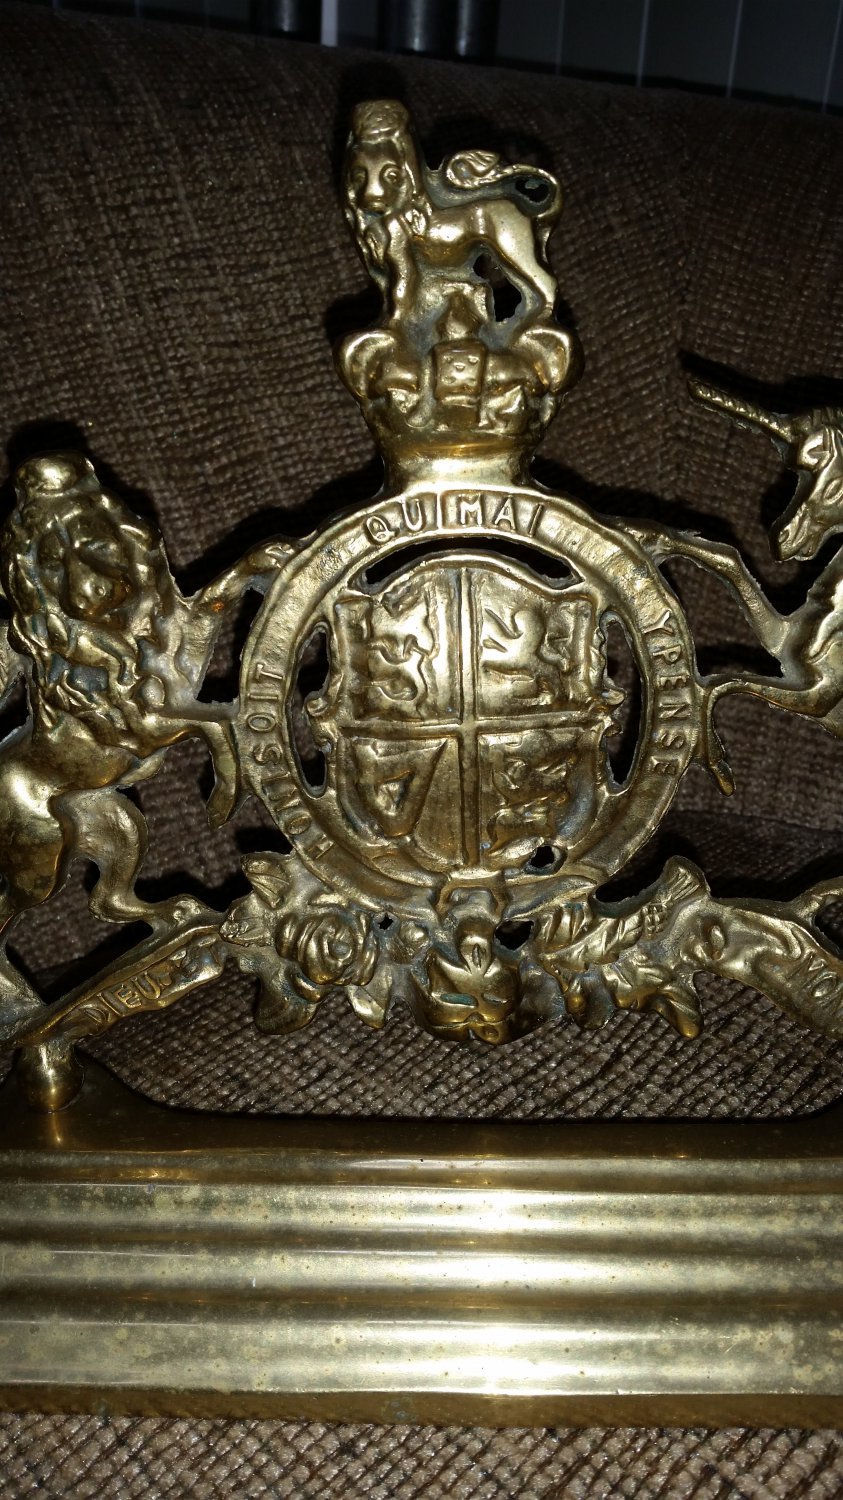 19th Century Brass Royal Coat of Arms - HONI SOIT QUI MAL Y PENSE!